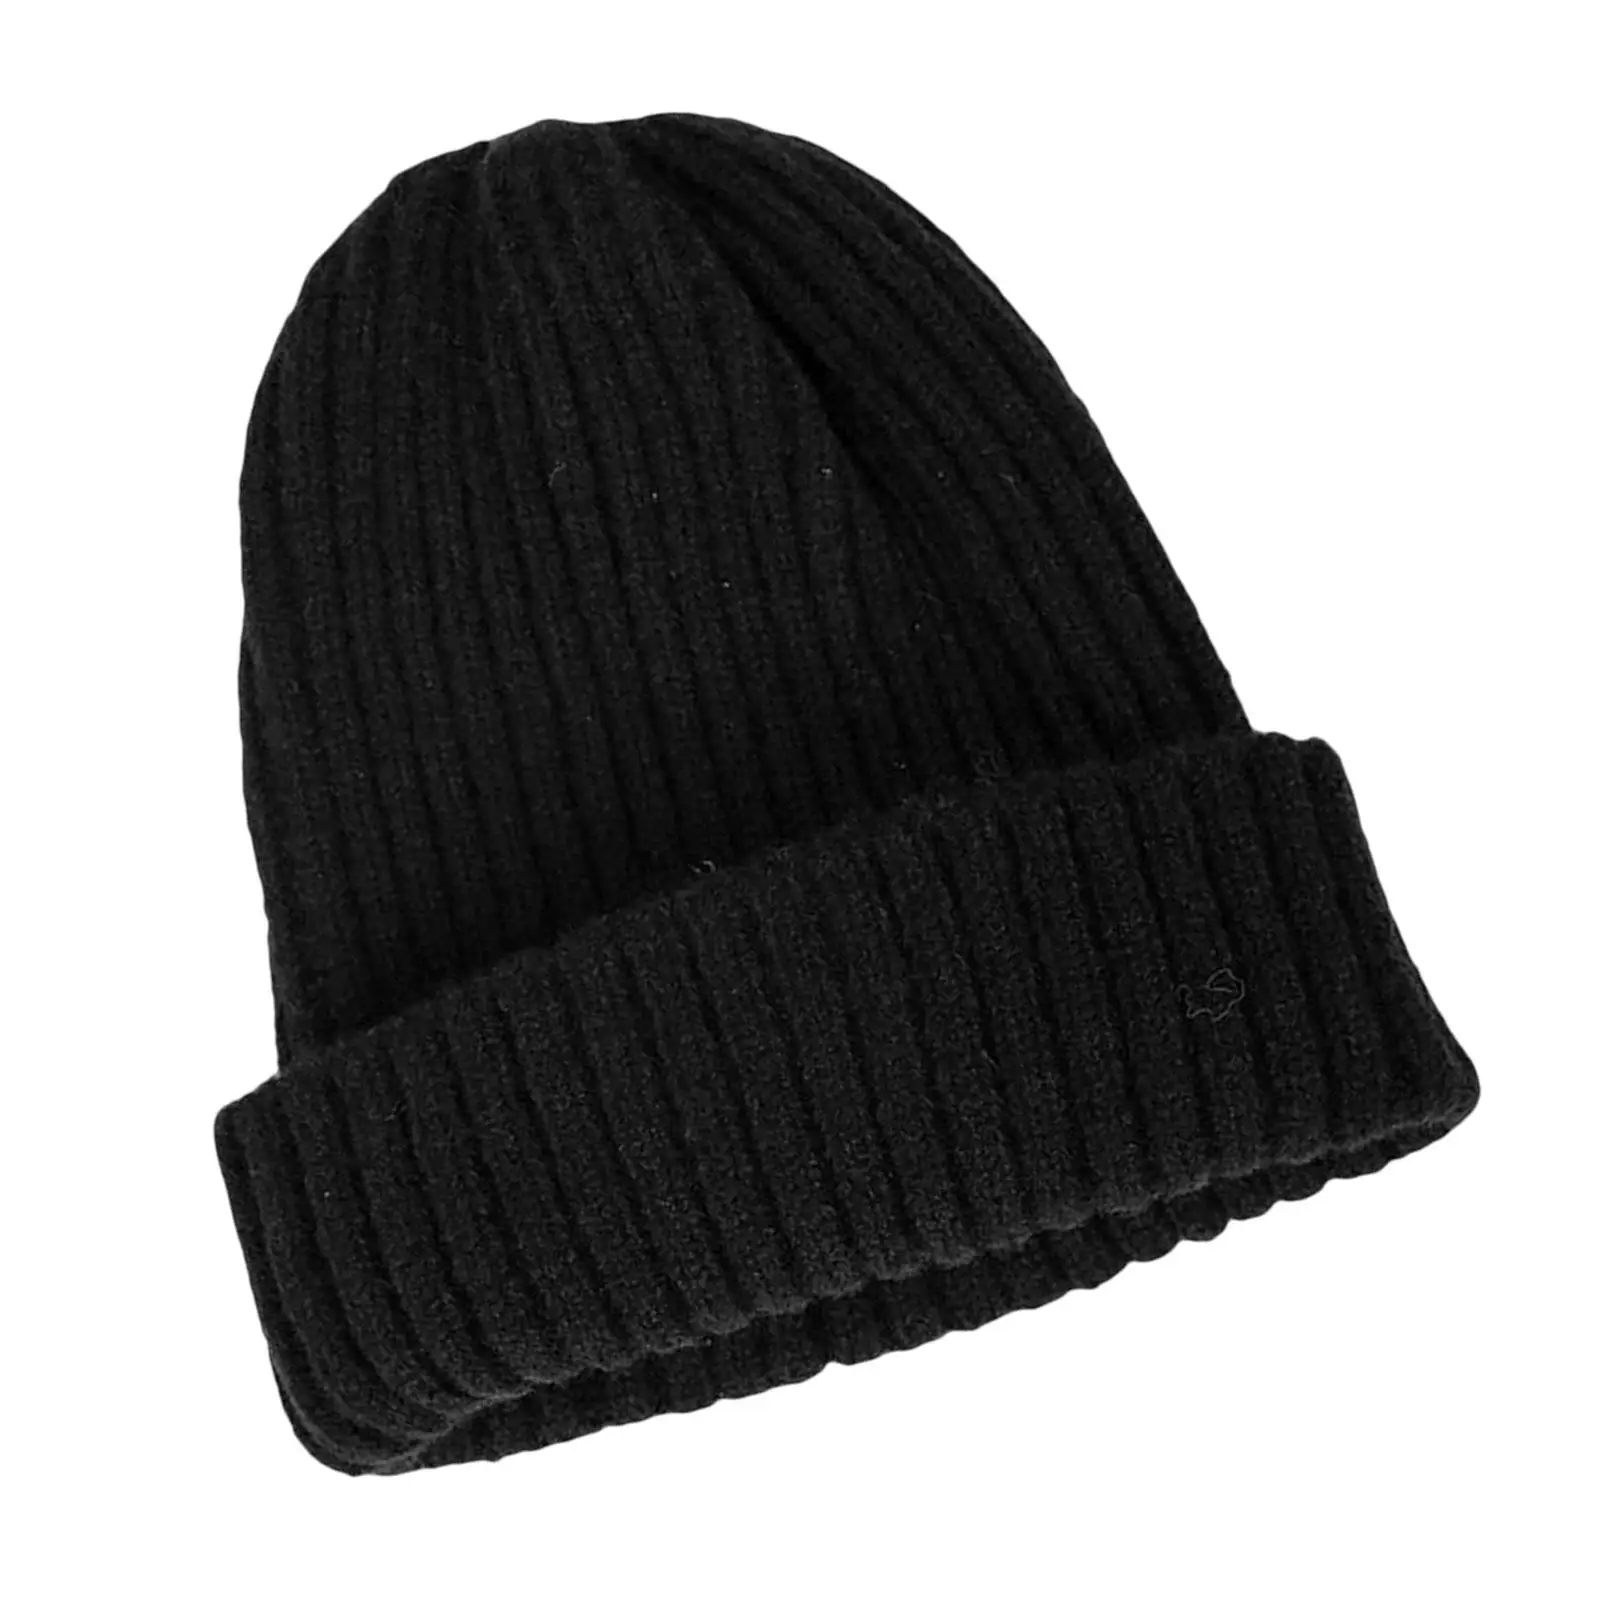 Knitted Cuffed hat Fisherman Beanie Slouchy One Size Warm Lightweight Skull Cap for Men women Winter